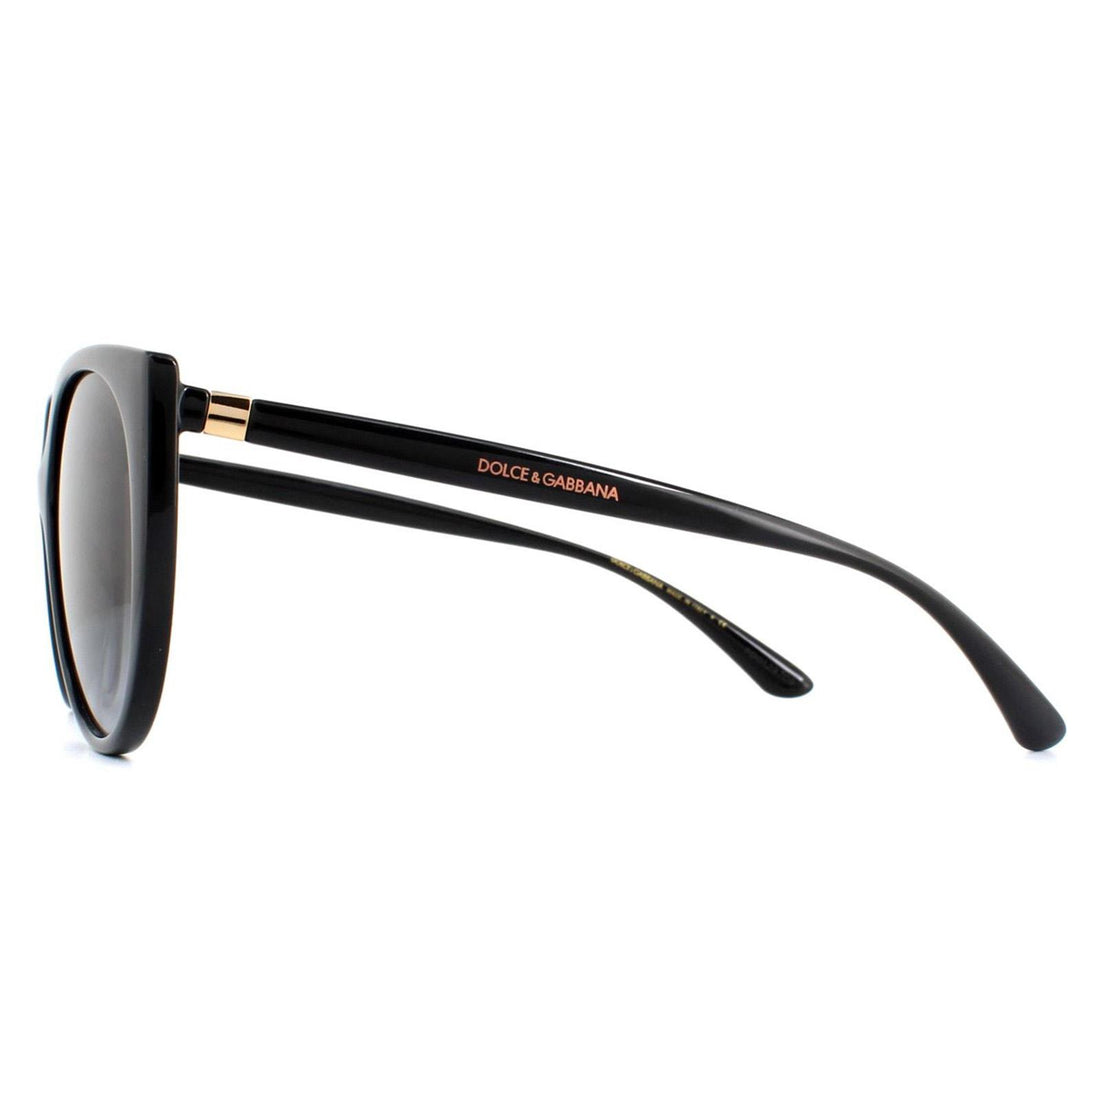 Dolce & Gabbana Sunglasses DG6119 501/8G Black Grey Gradient